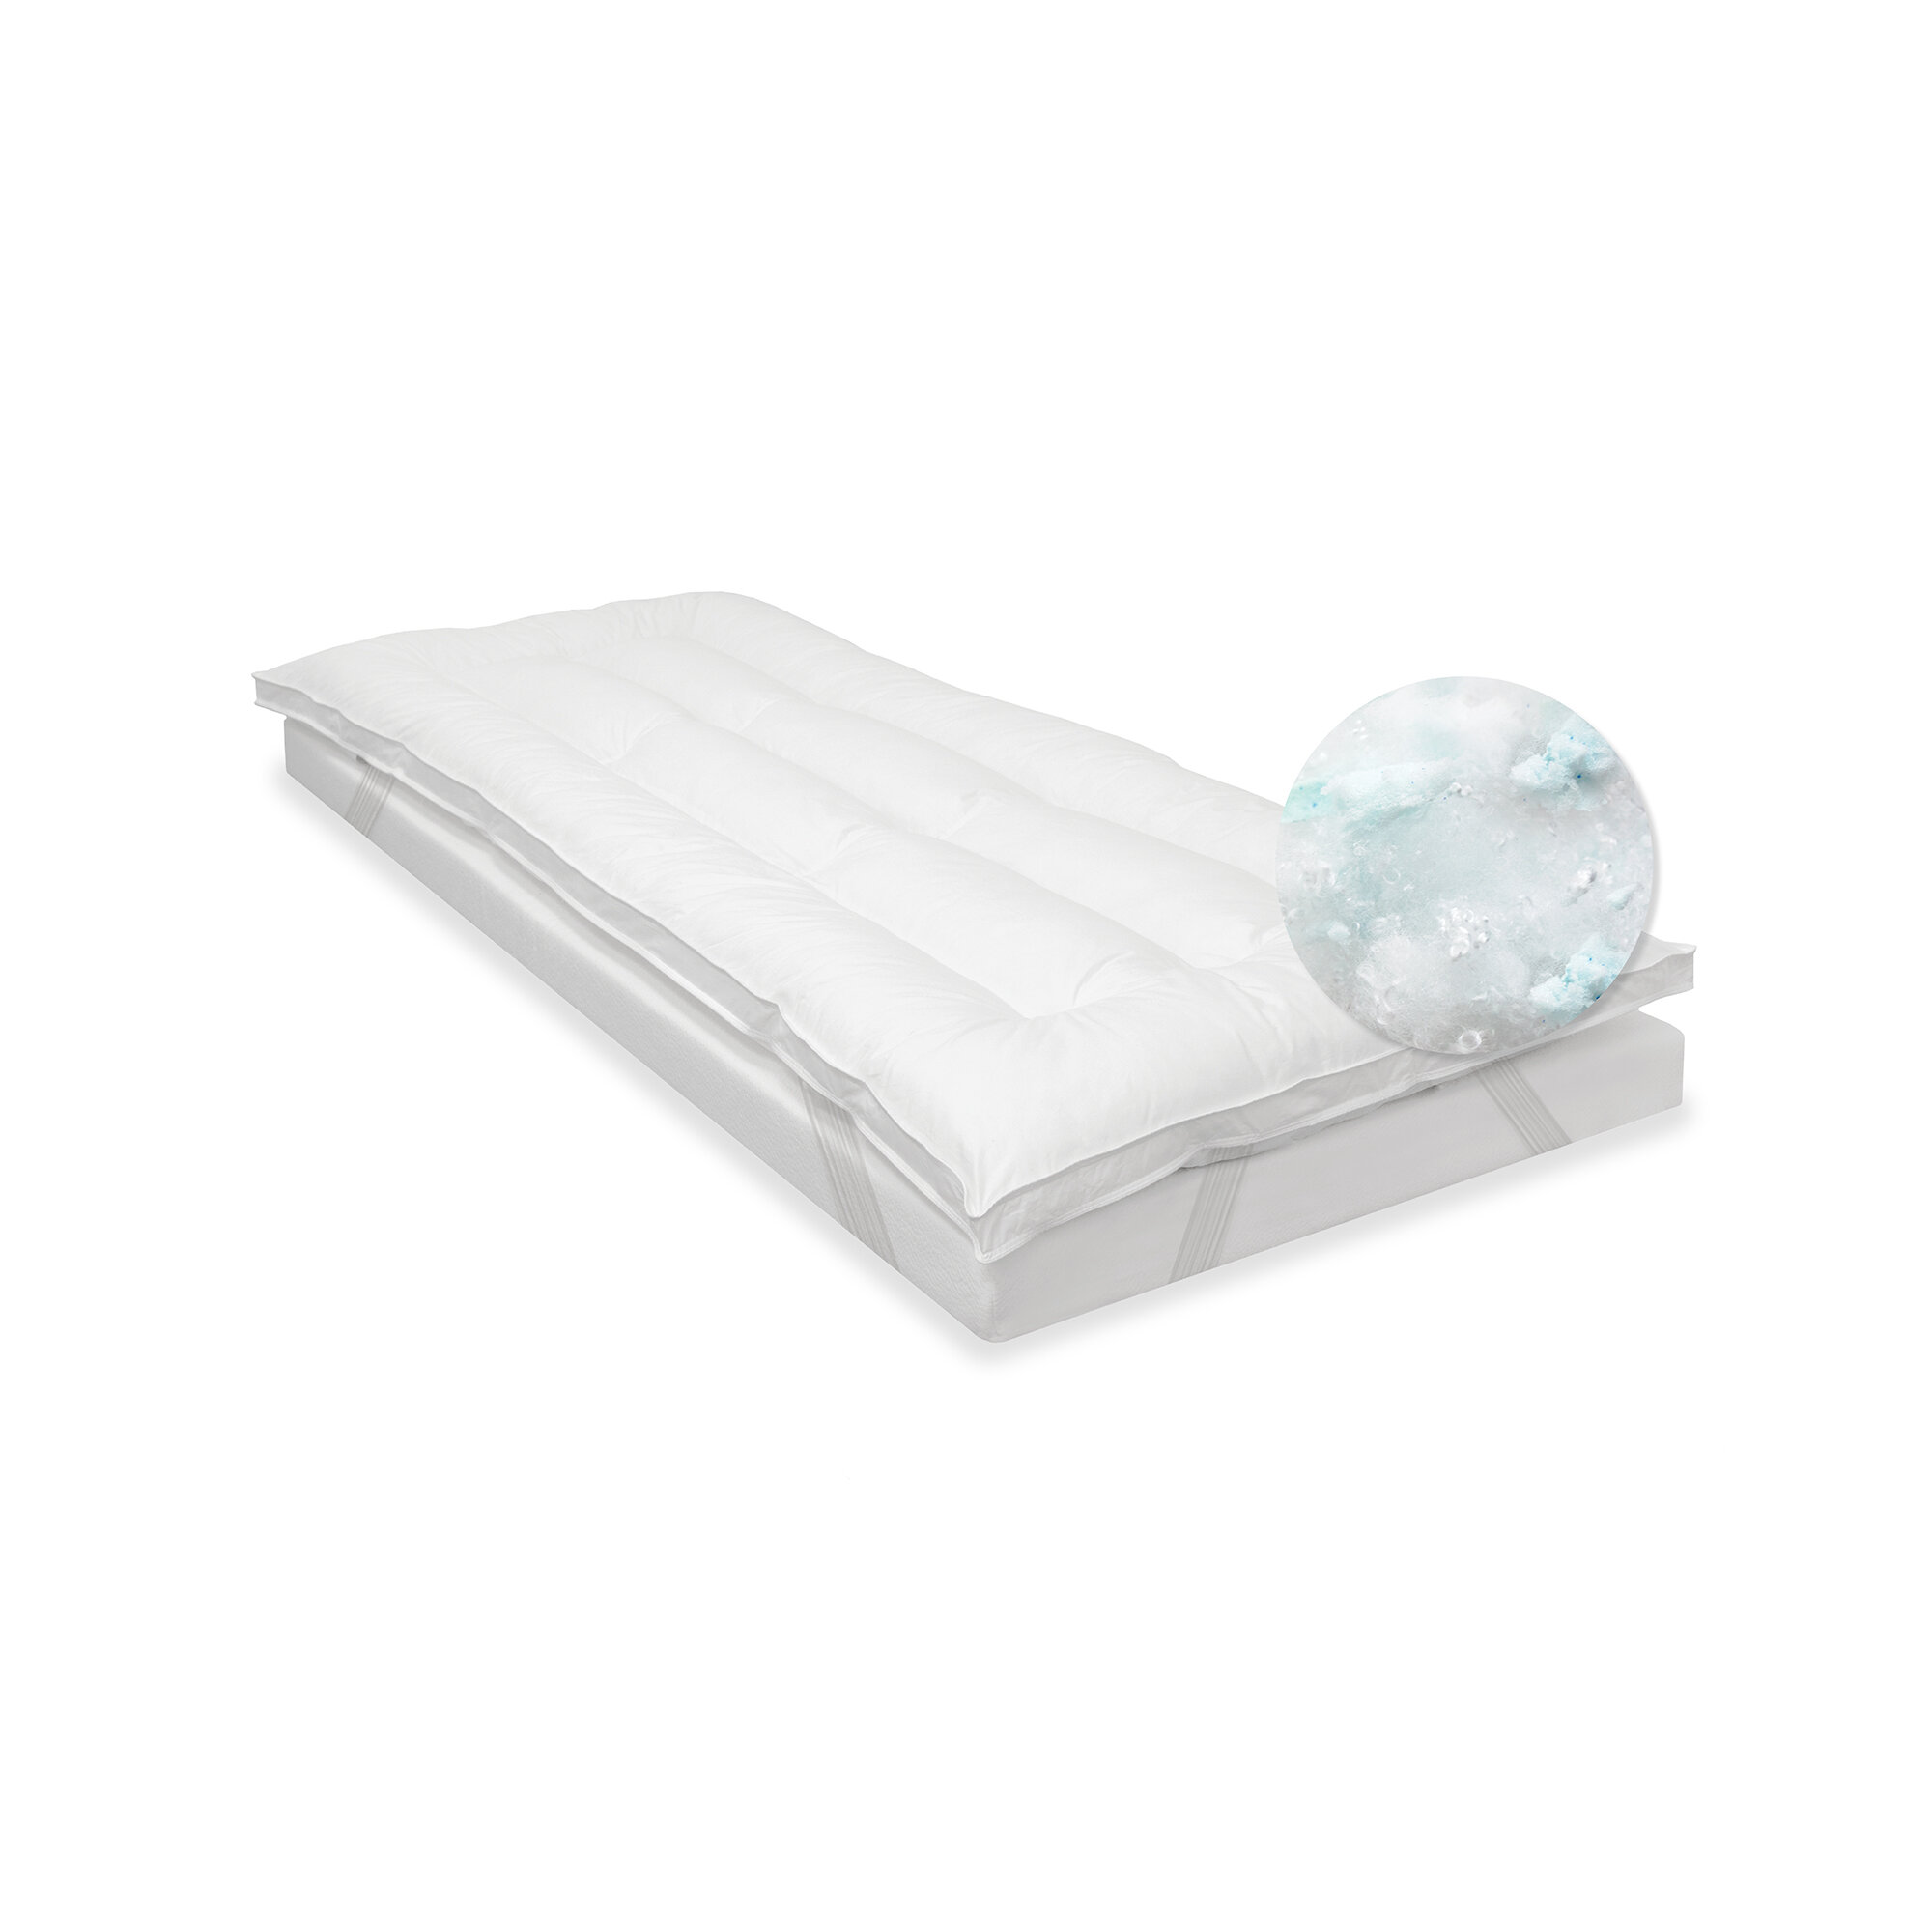 memory foam cot bed mattress